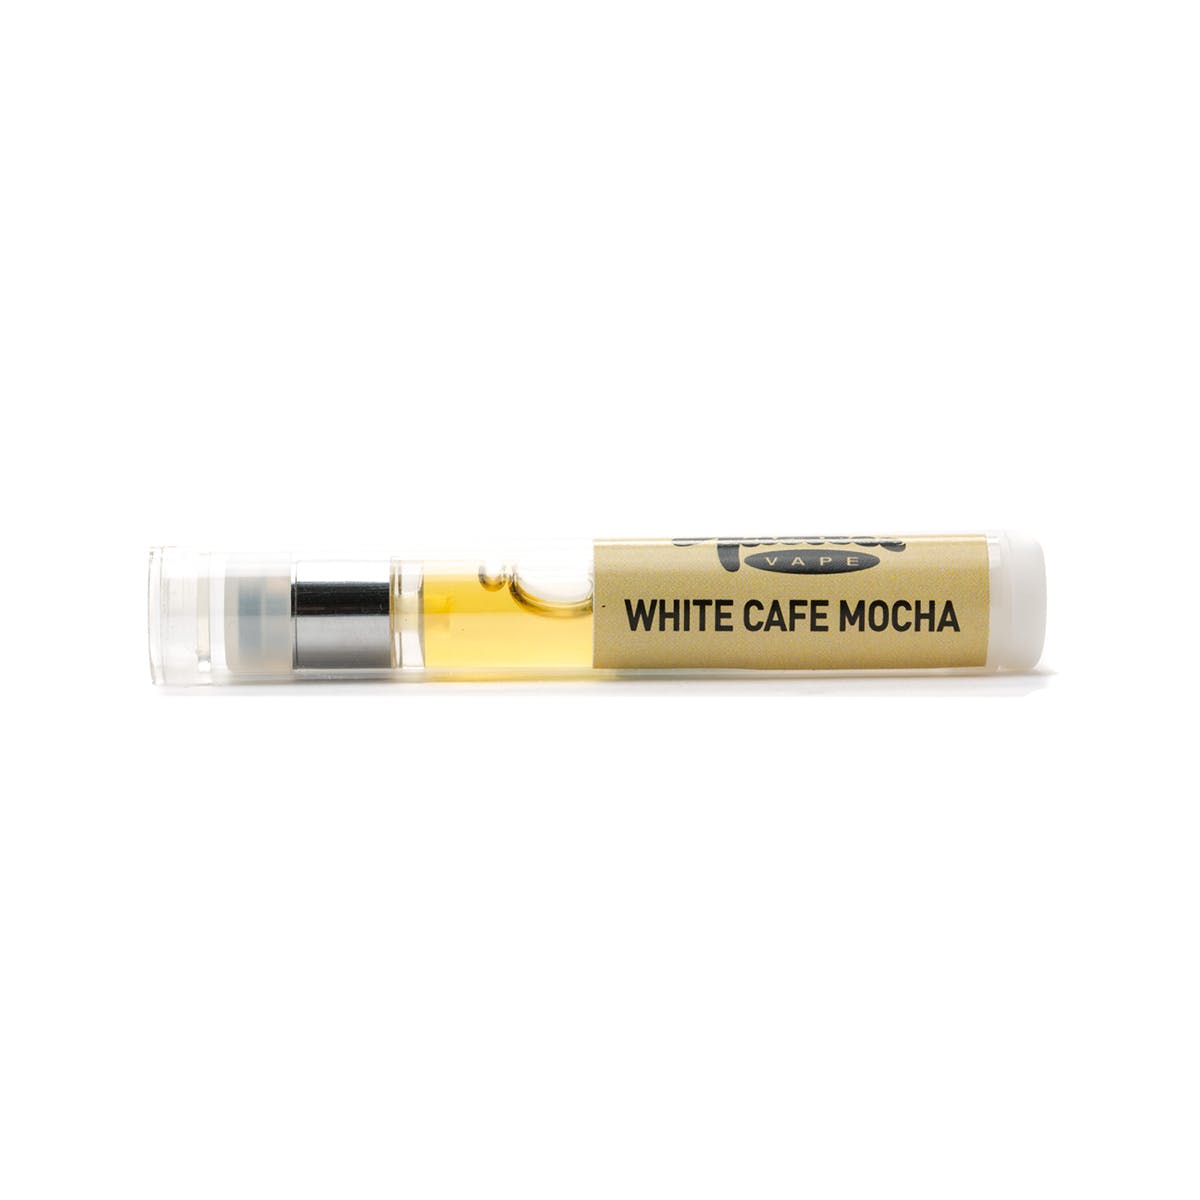 White Cafe Mocha Tasteee Cartridge